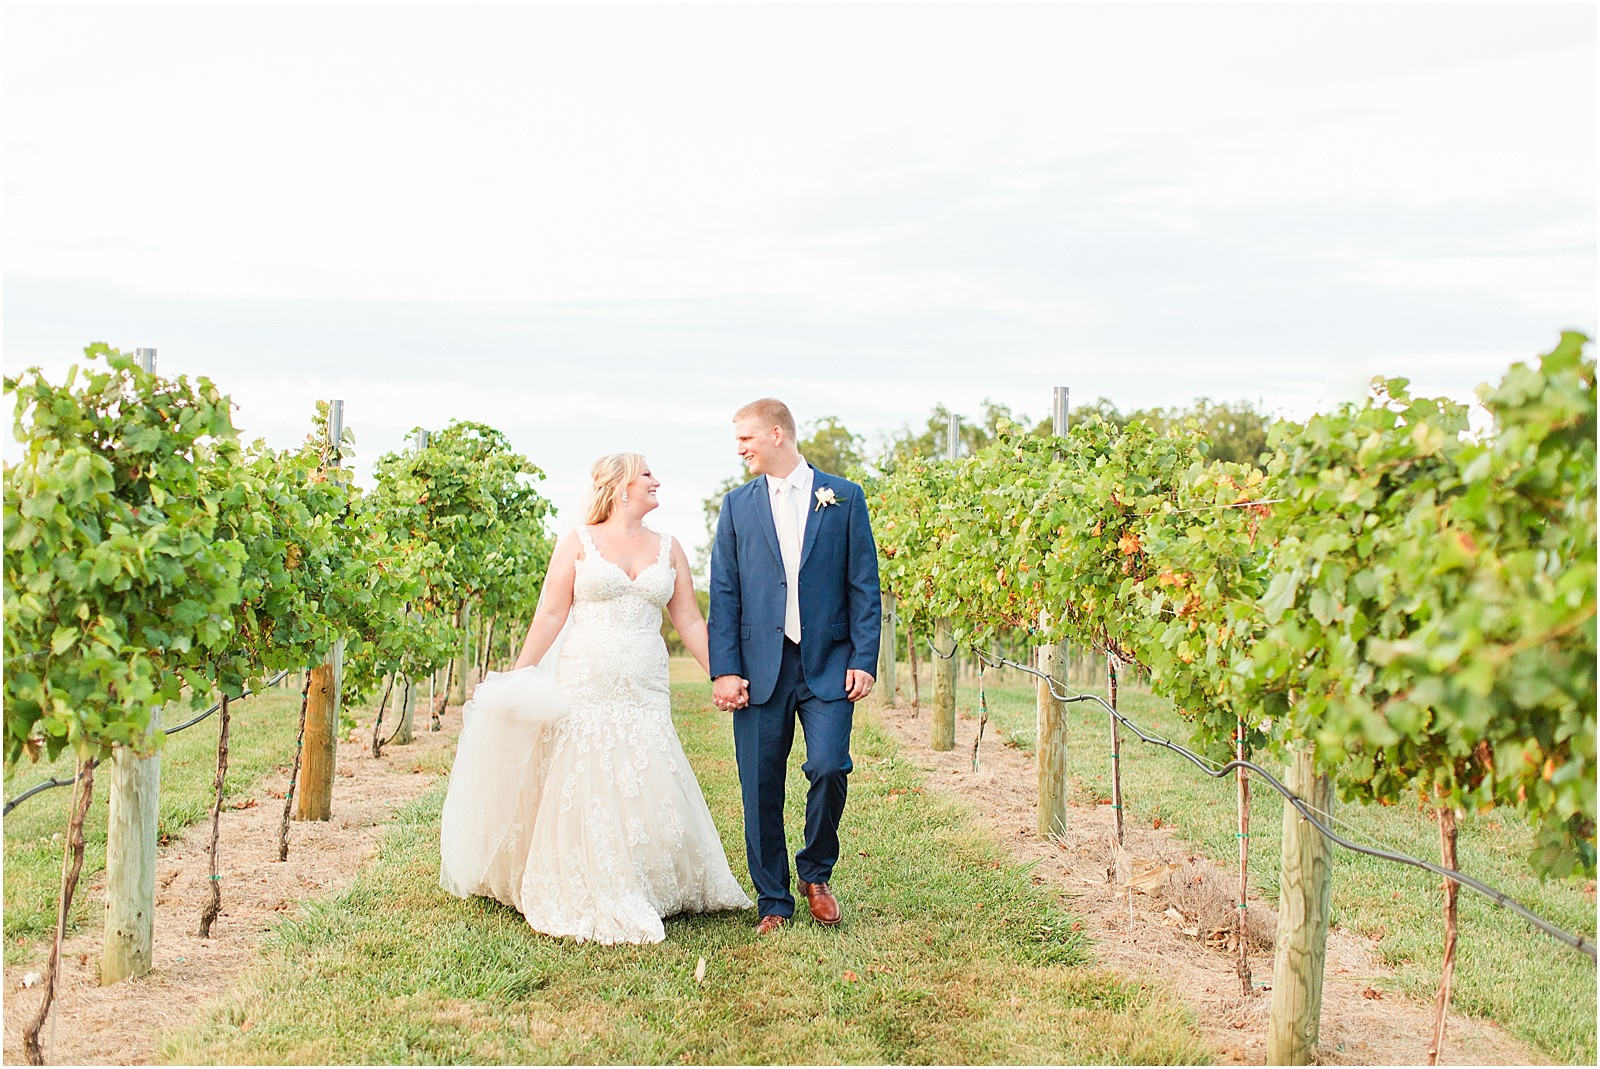 Kelsey and Caleb | Walkers Bluff Winery Wedding | Bret and Brandie Photography099.jpg